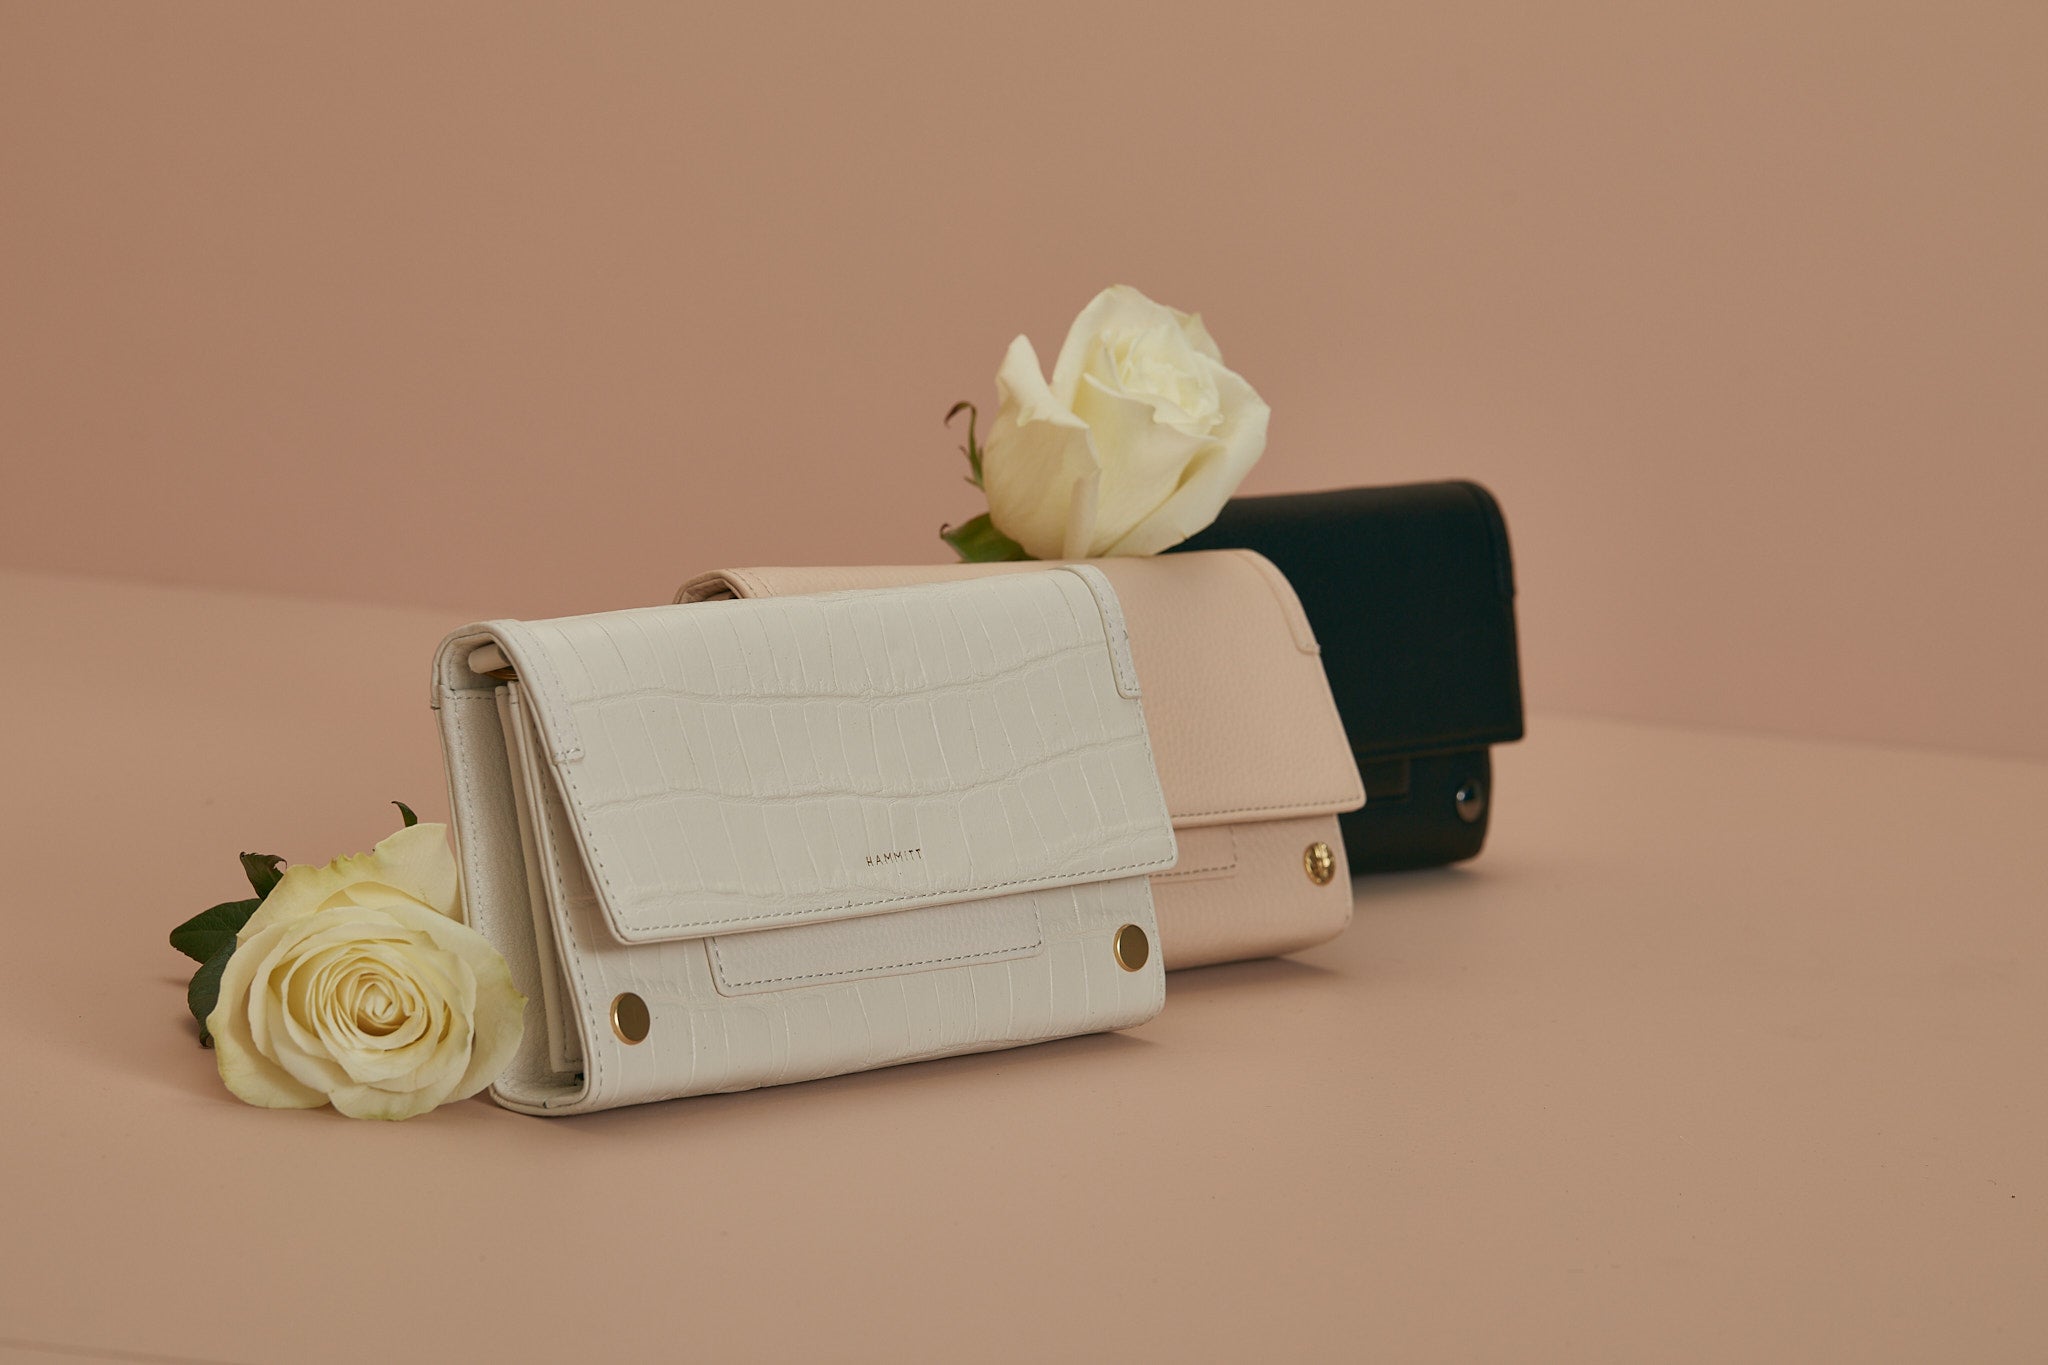 Should you have a Handbag for your Wedding? – HAMMITT